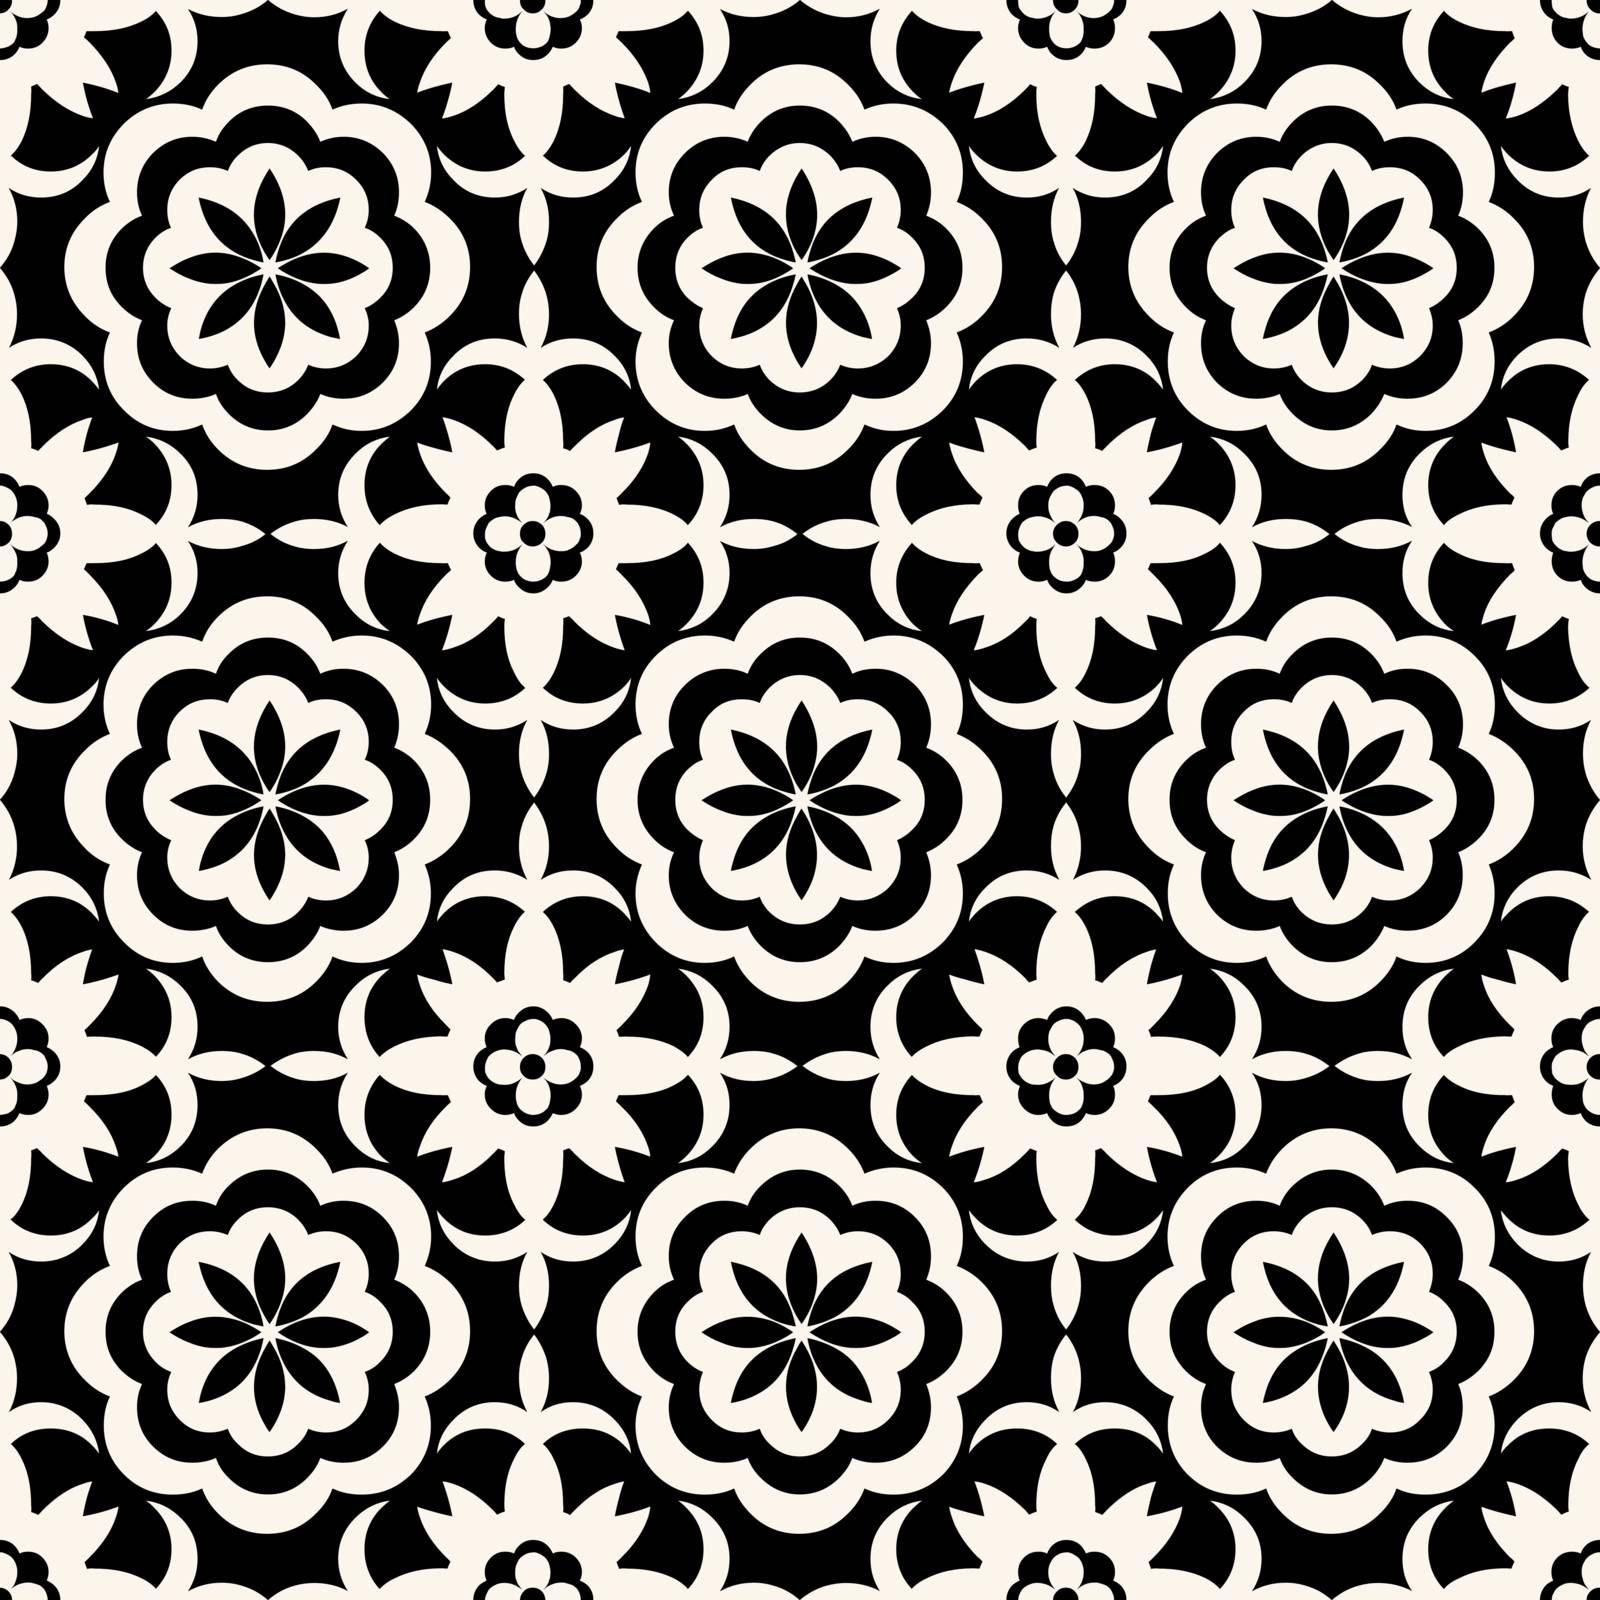 floral baroque pattern